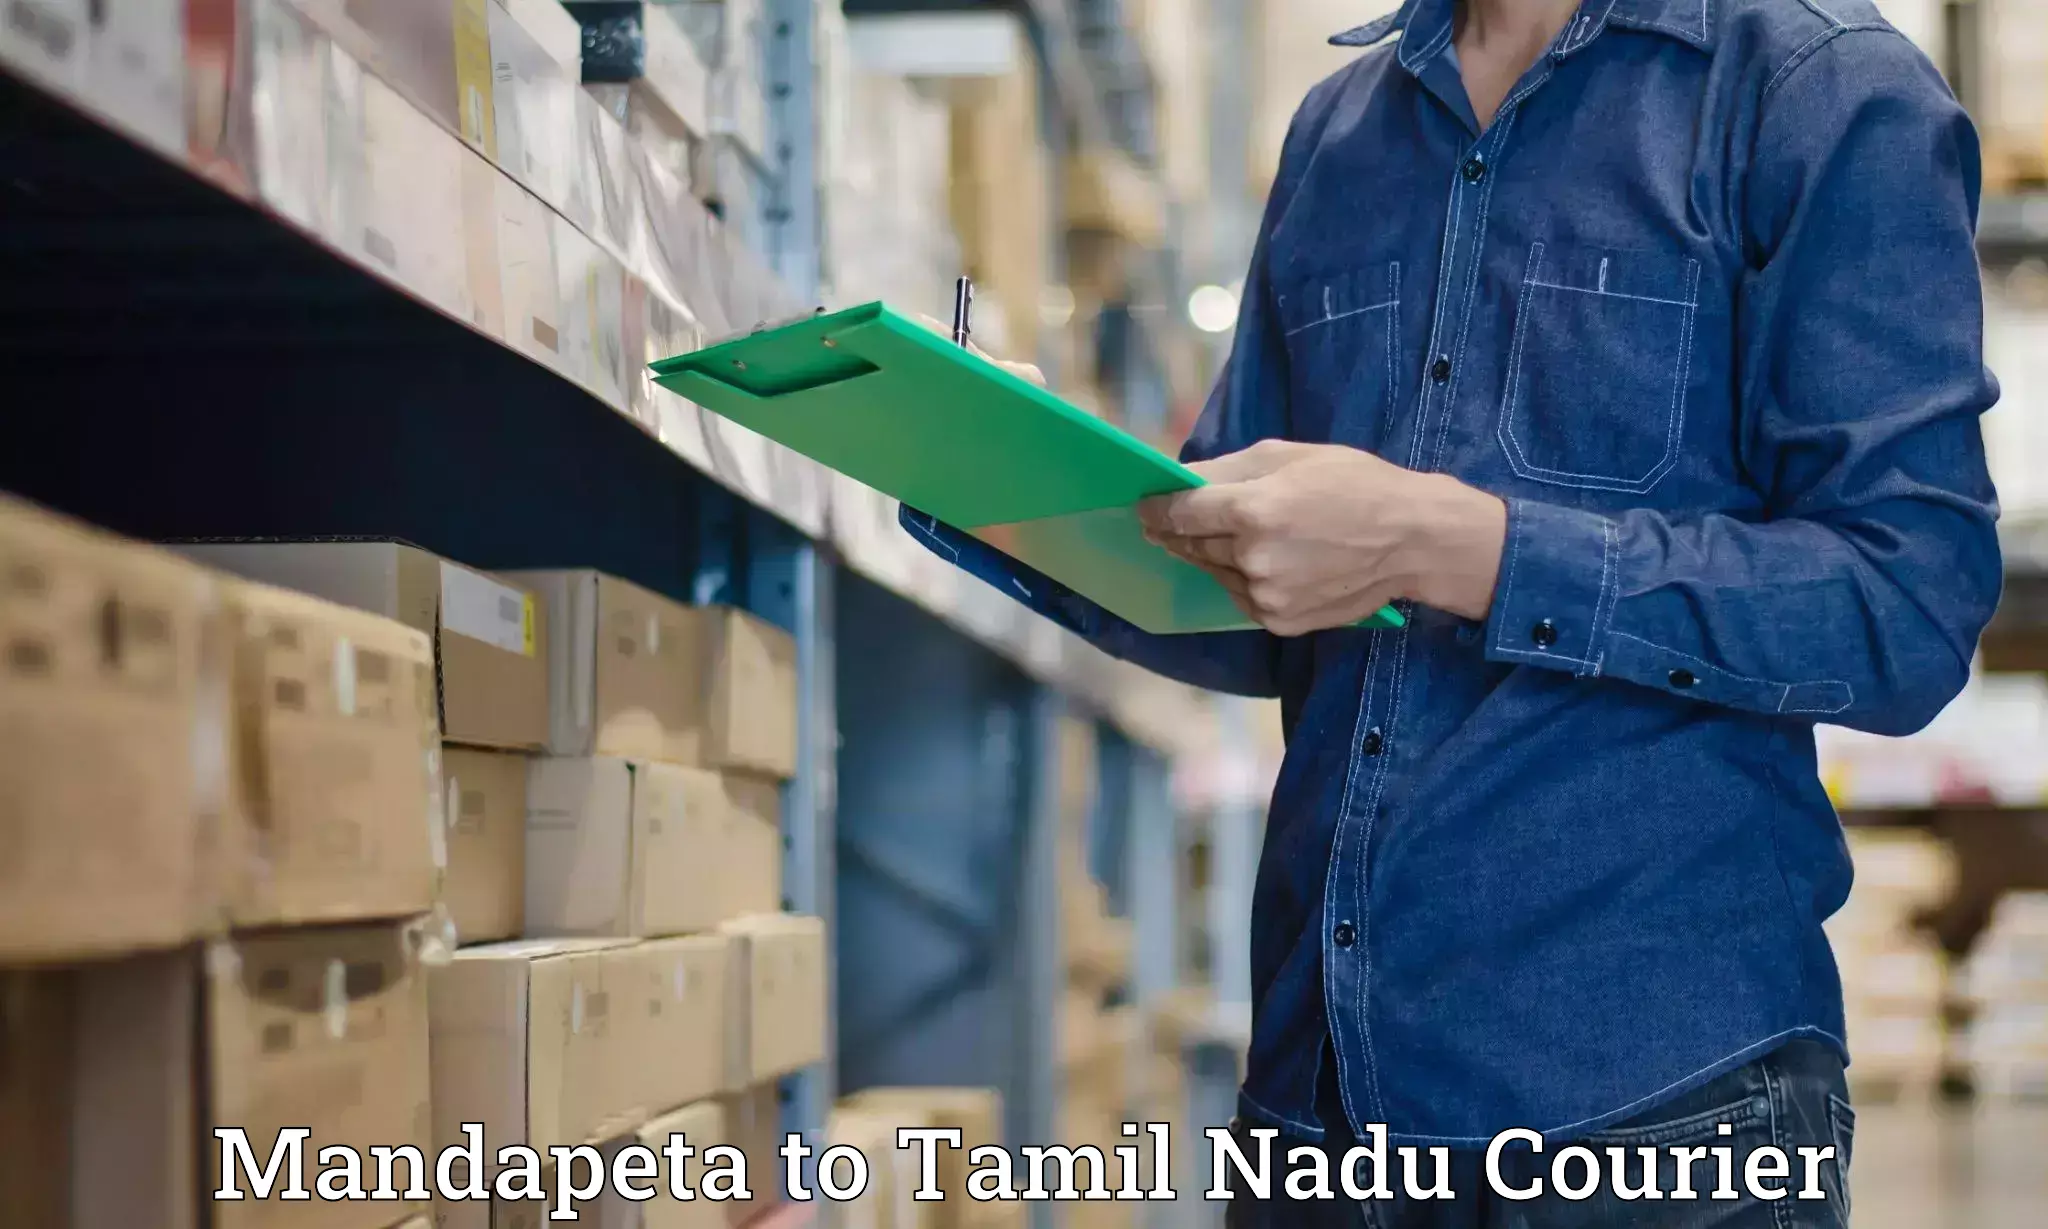 Courier service booking Mandapeta to Tamil Nadu